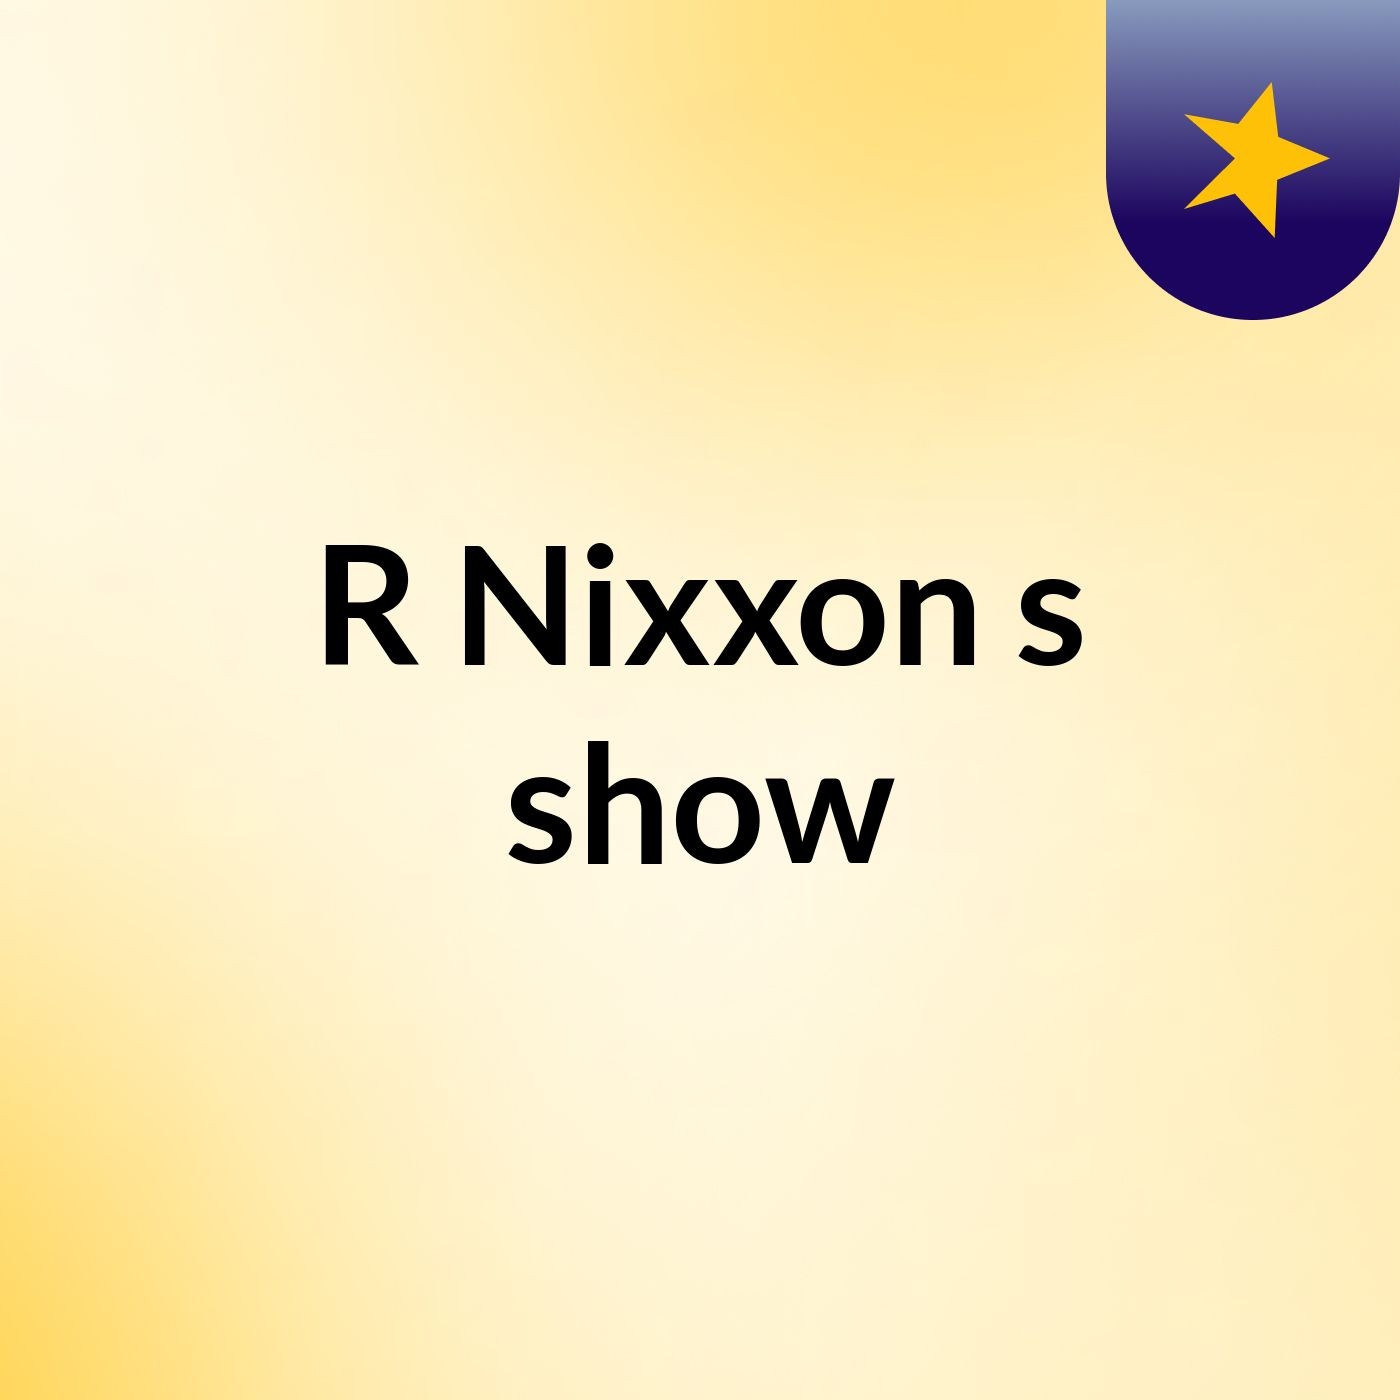 R Nixxon's show